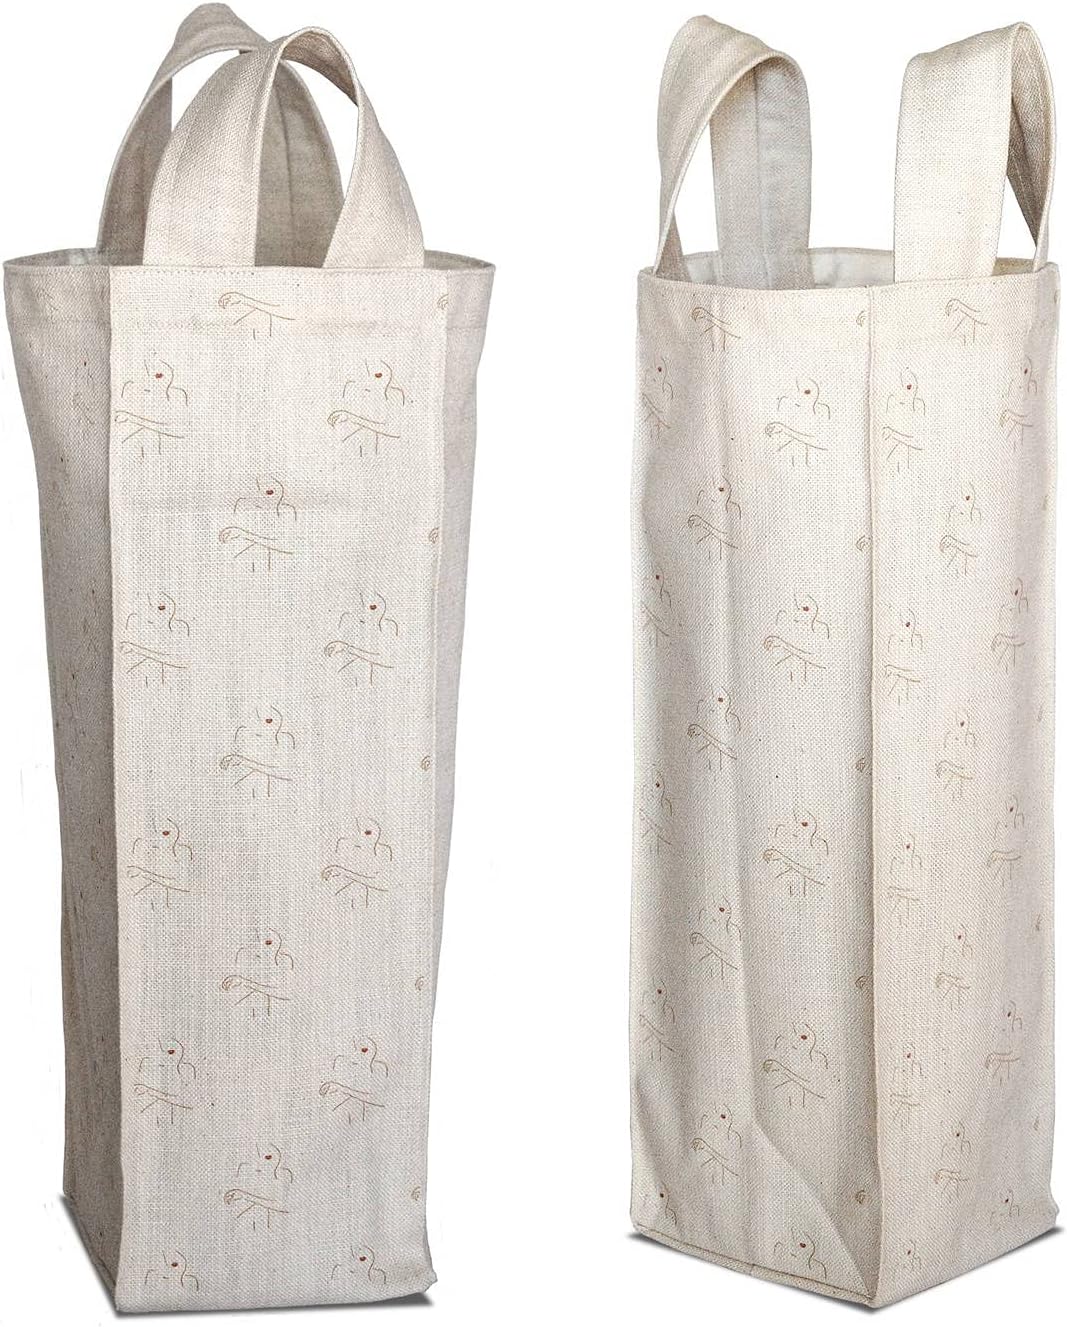 Bonamaison Digitally Printed 50% Cotton - 50% Polyester Sketch Design White Wine Bag RRP £3.57 CLEARANCE XL £2.99